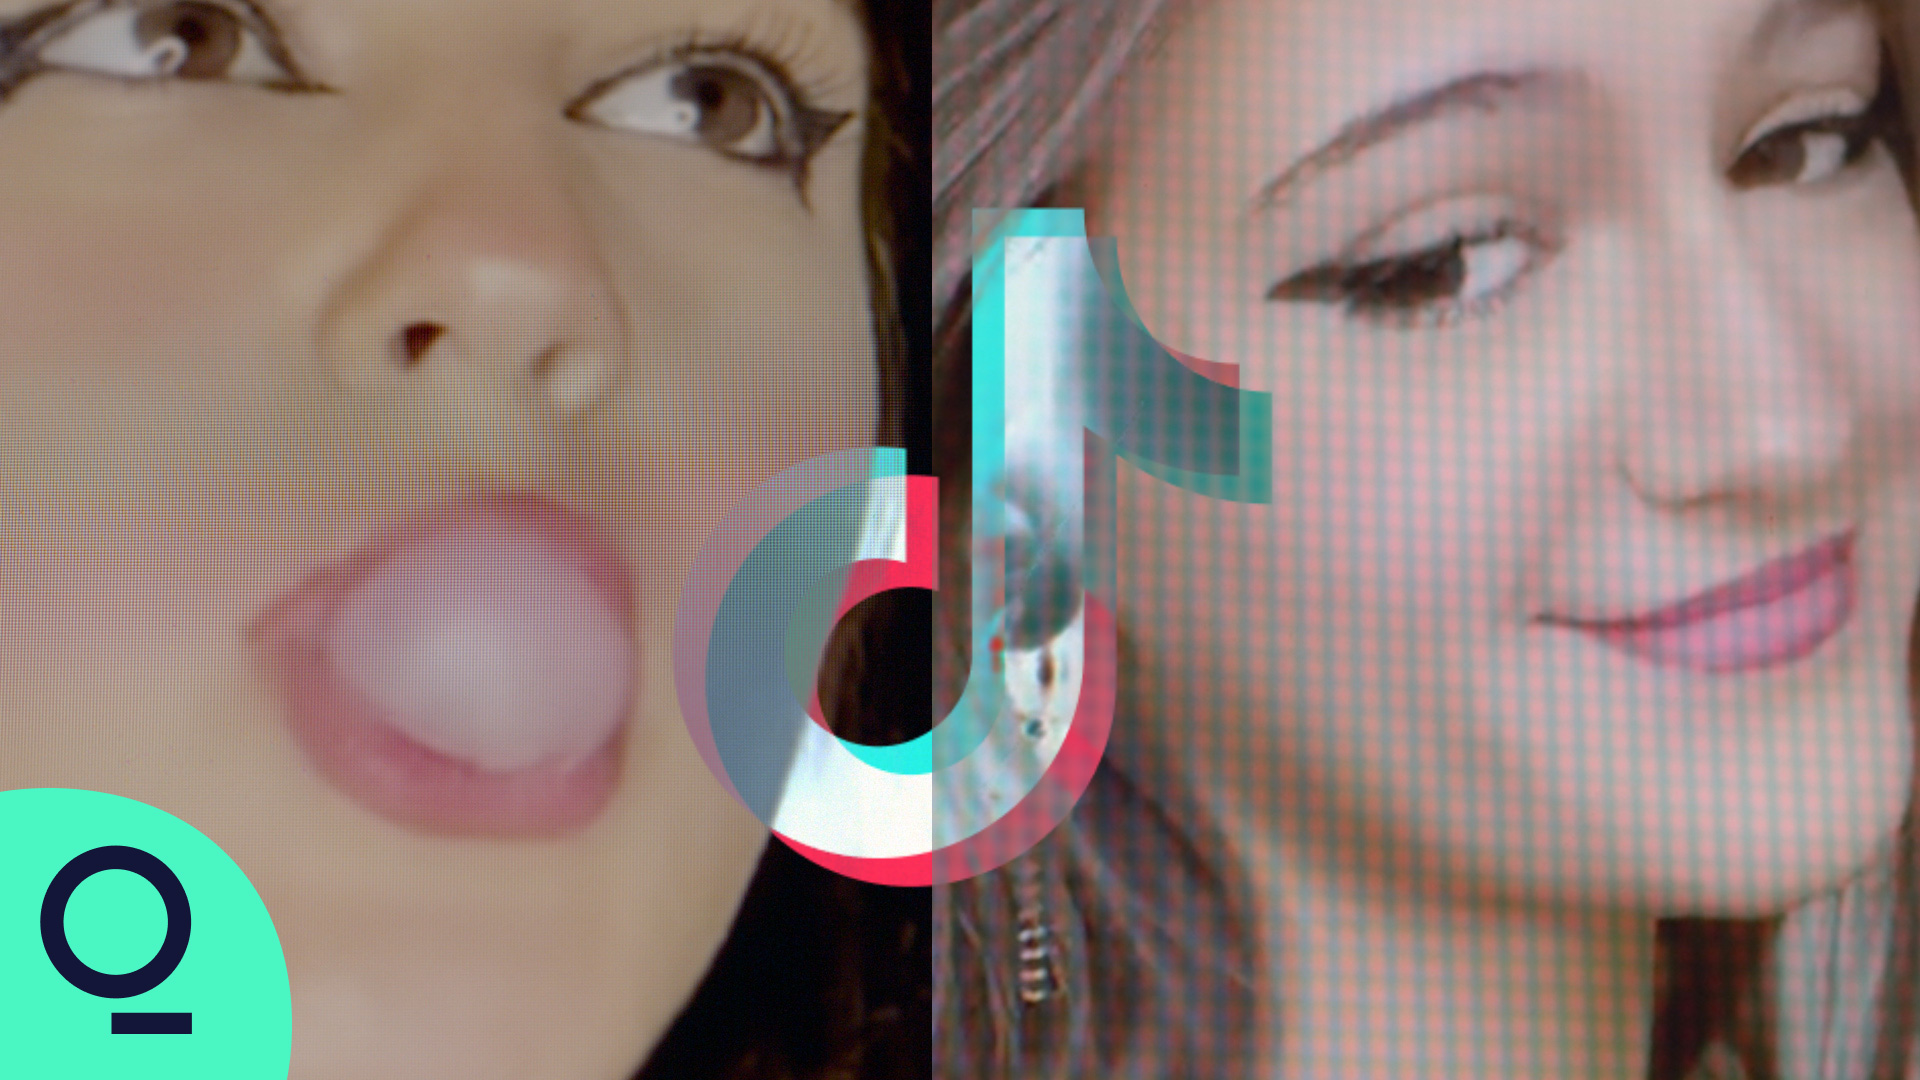 Mariya Sax Xxx Video - Video: The Hypersexualization of TikTok's Teen Users - Bloomberg